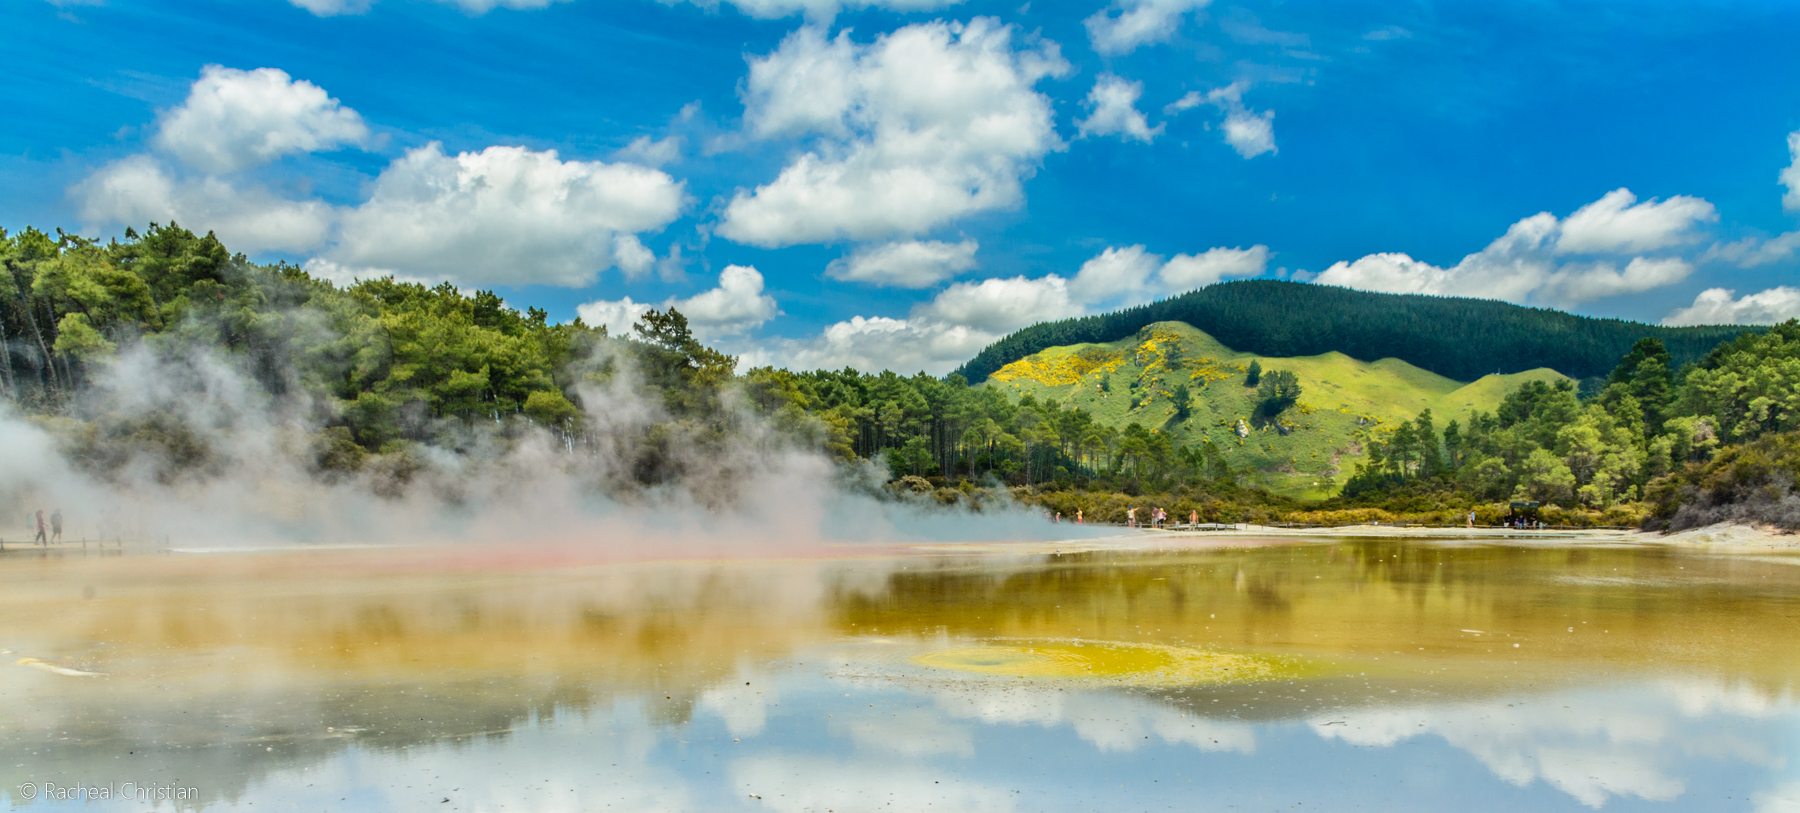 Wai-O-Tapu Thermal Wonderland |Rotorua, New Zealand - Champagne Pool by Racheal Christian